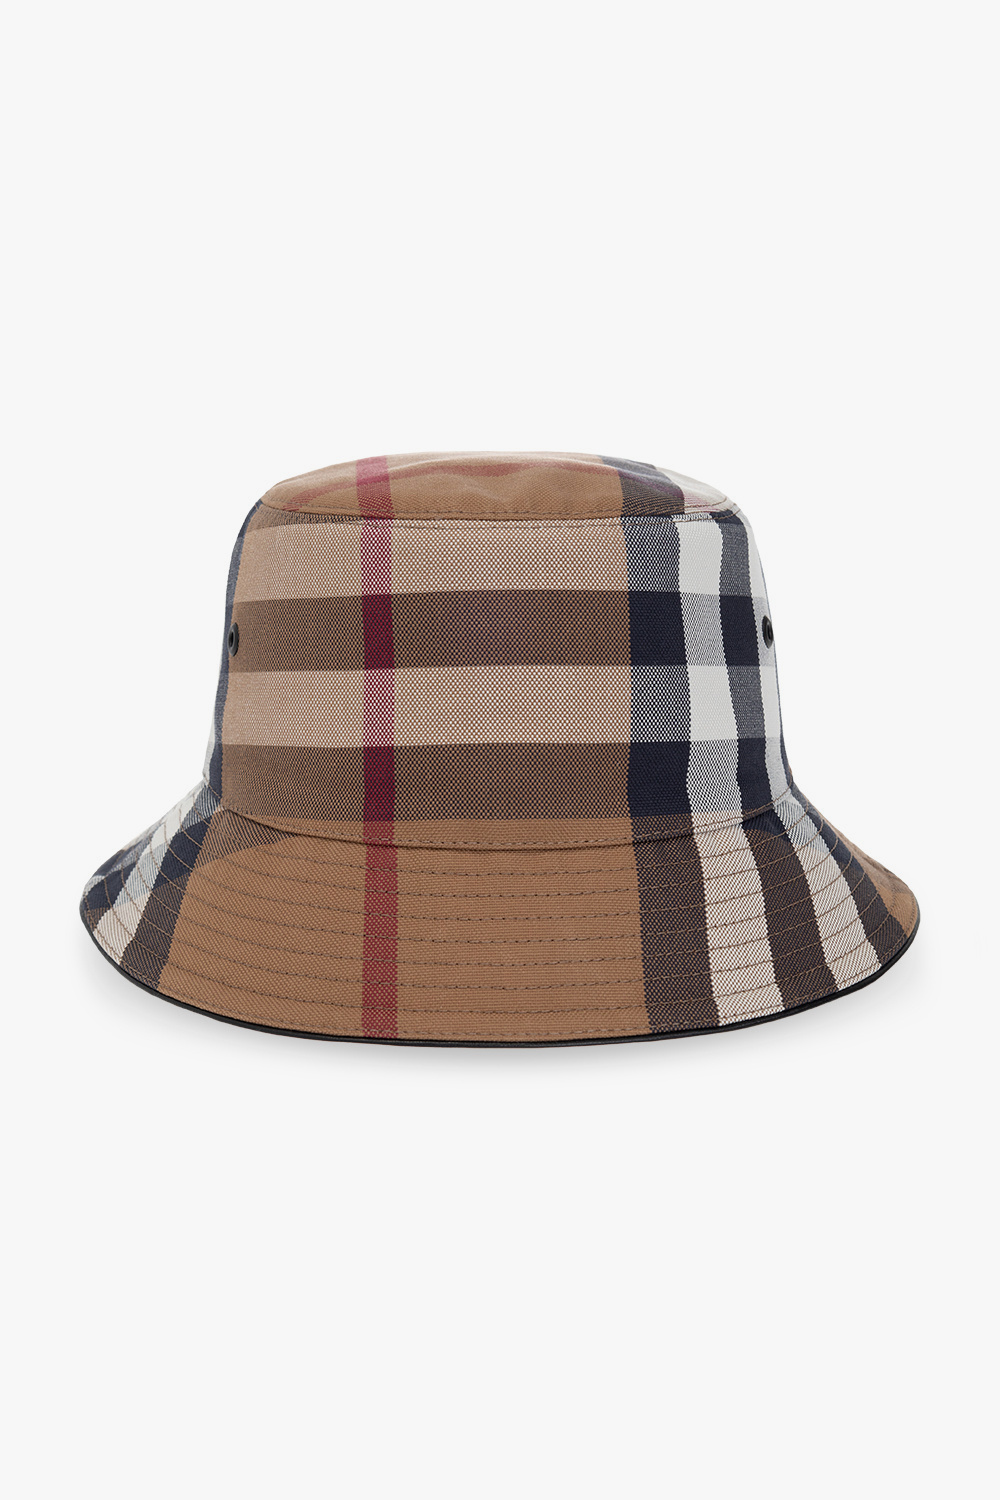 Burberry Vintage Check Bucket Hat